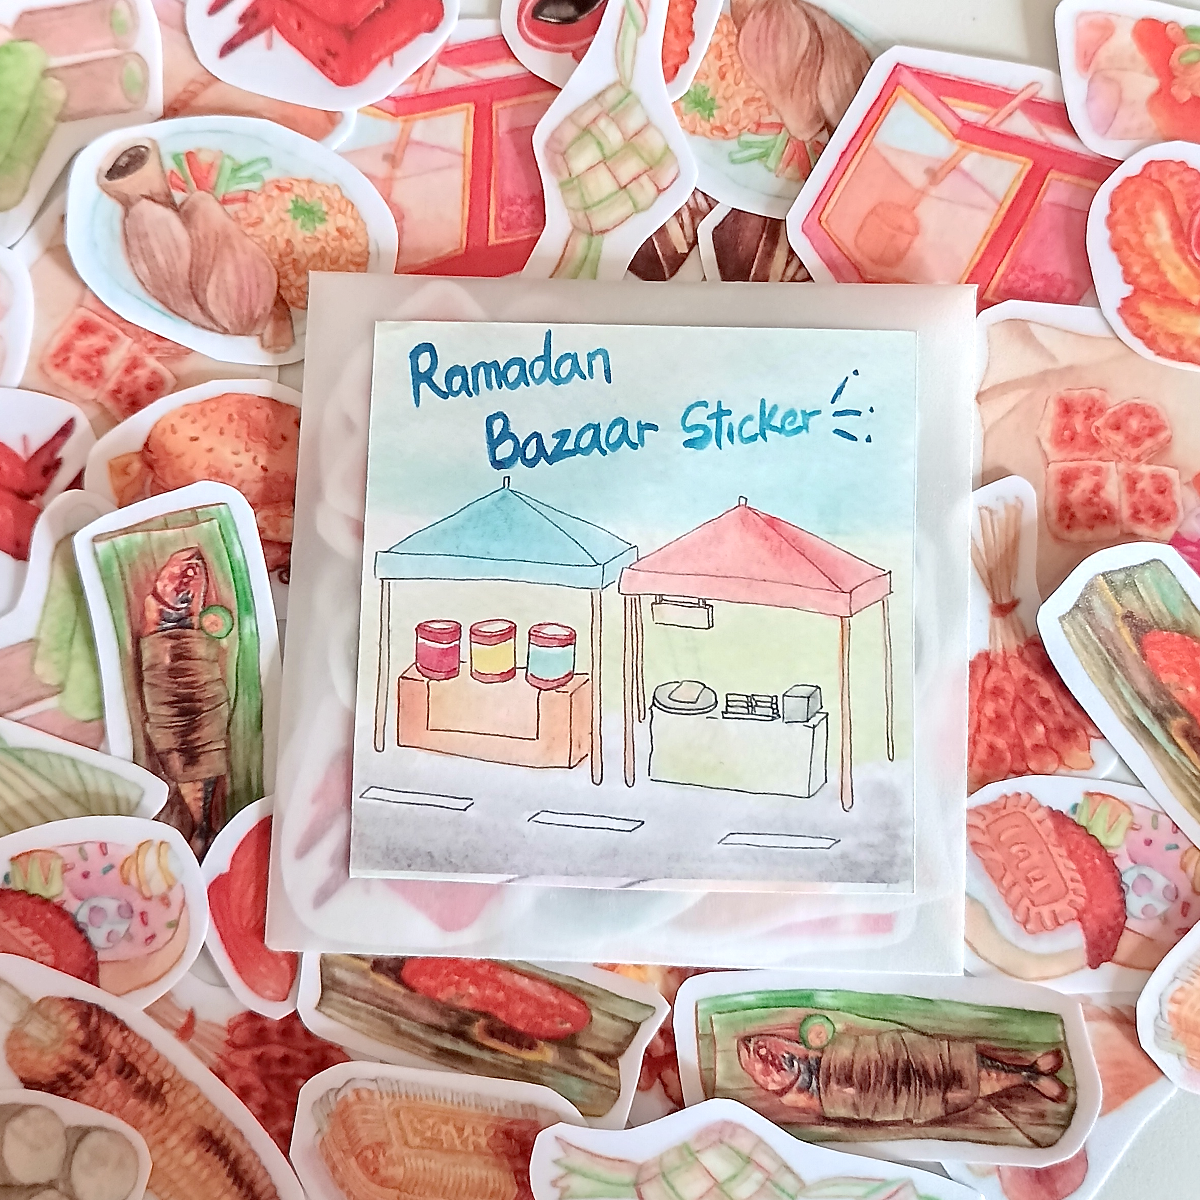 Mi Sticker - Ramadhan bazaar